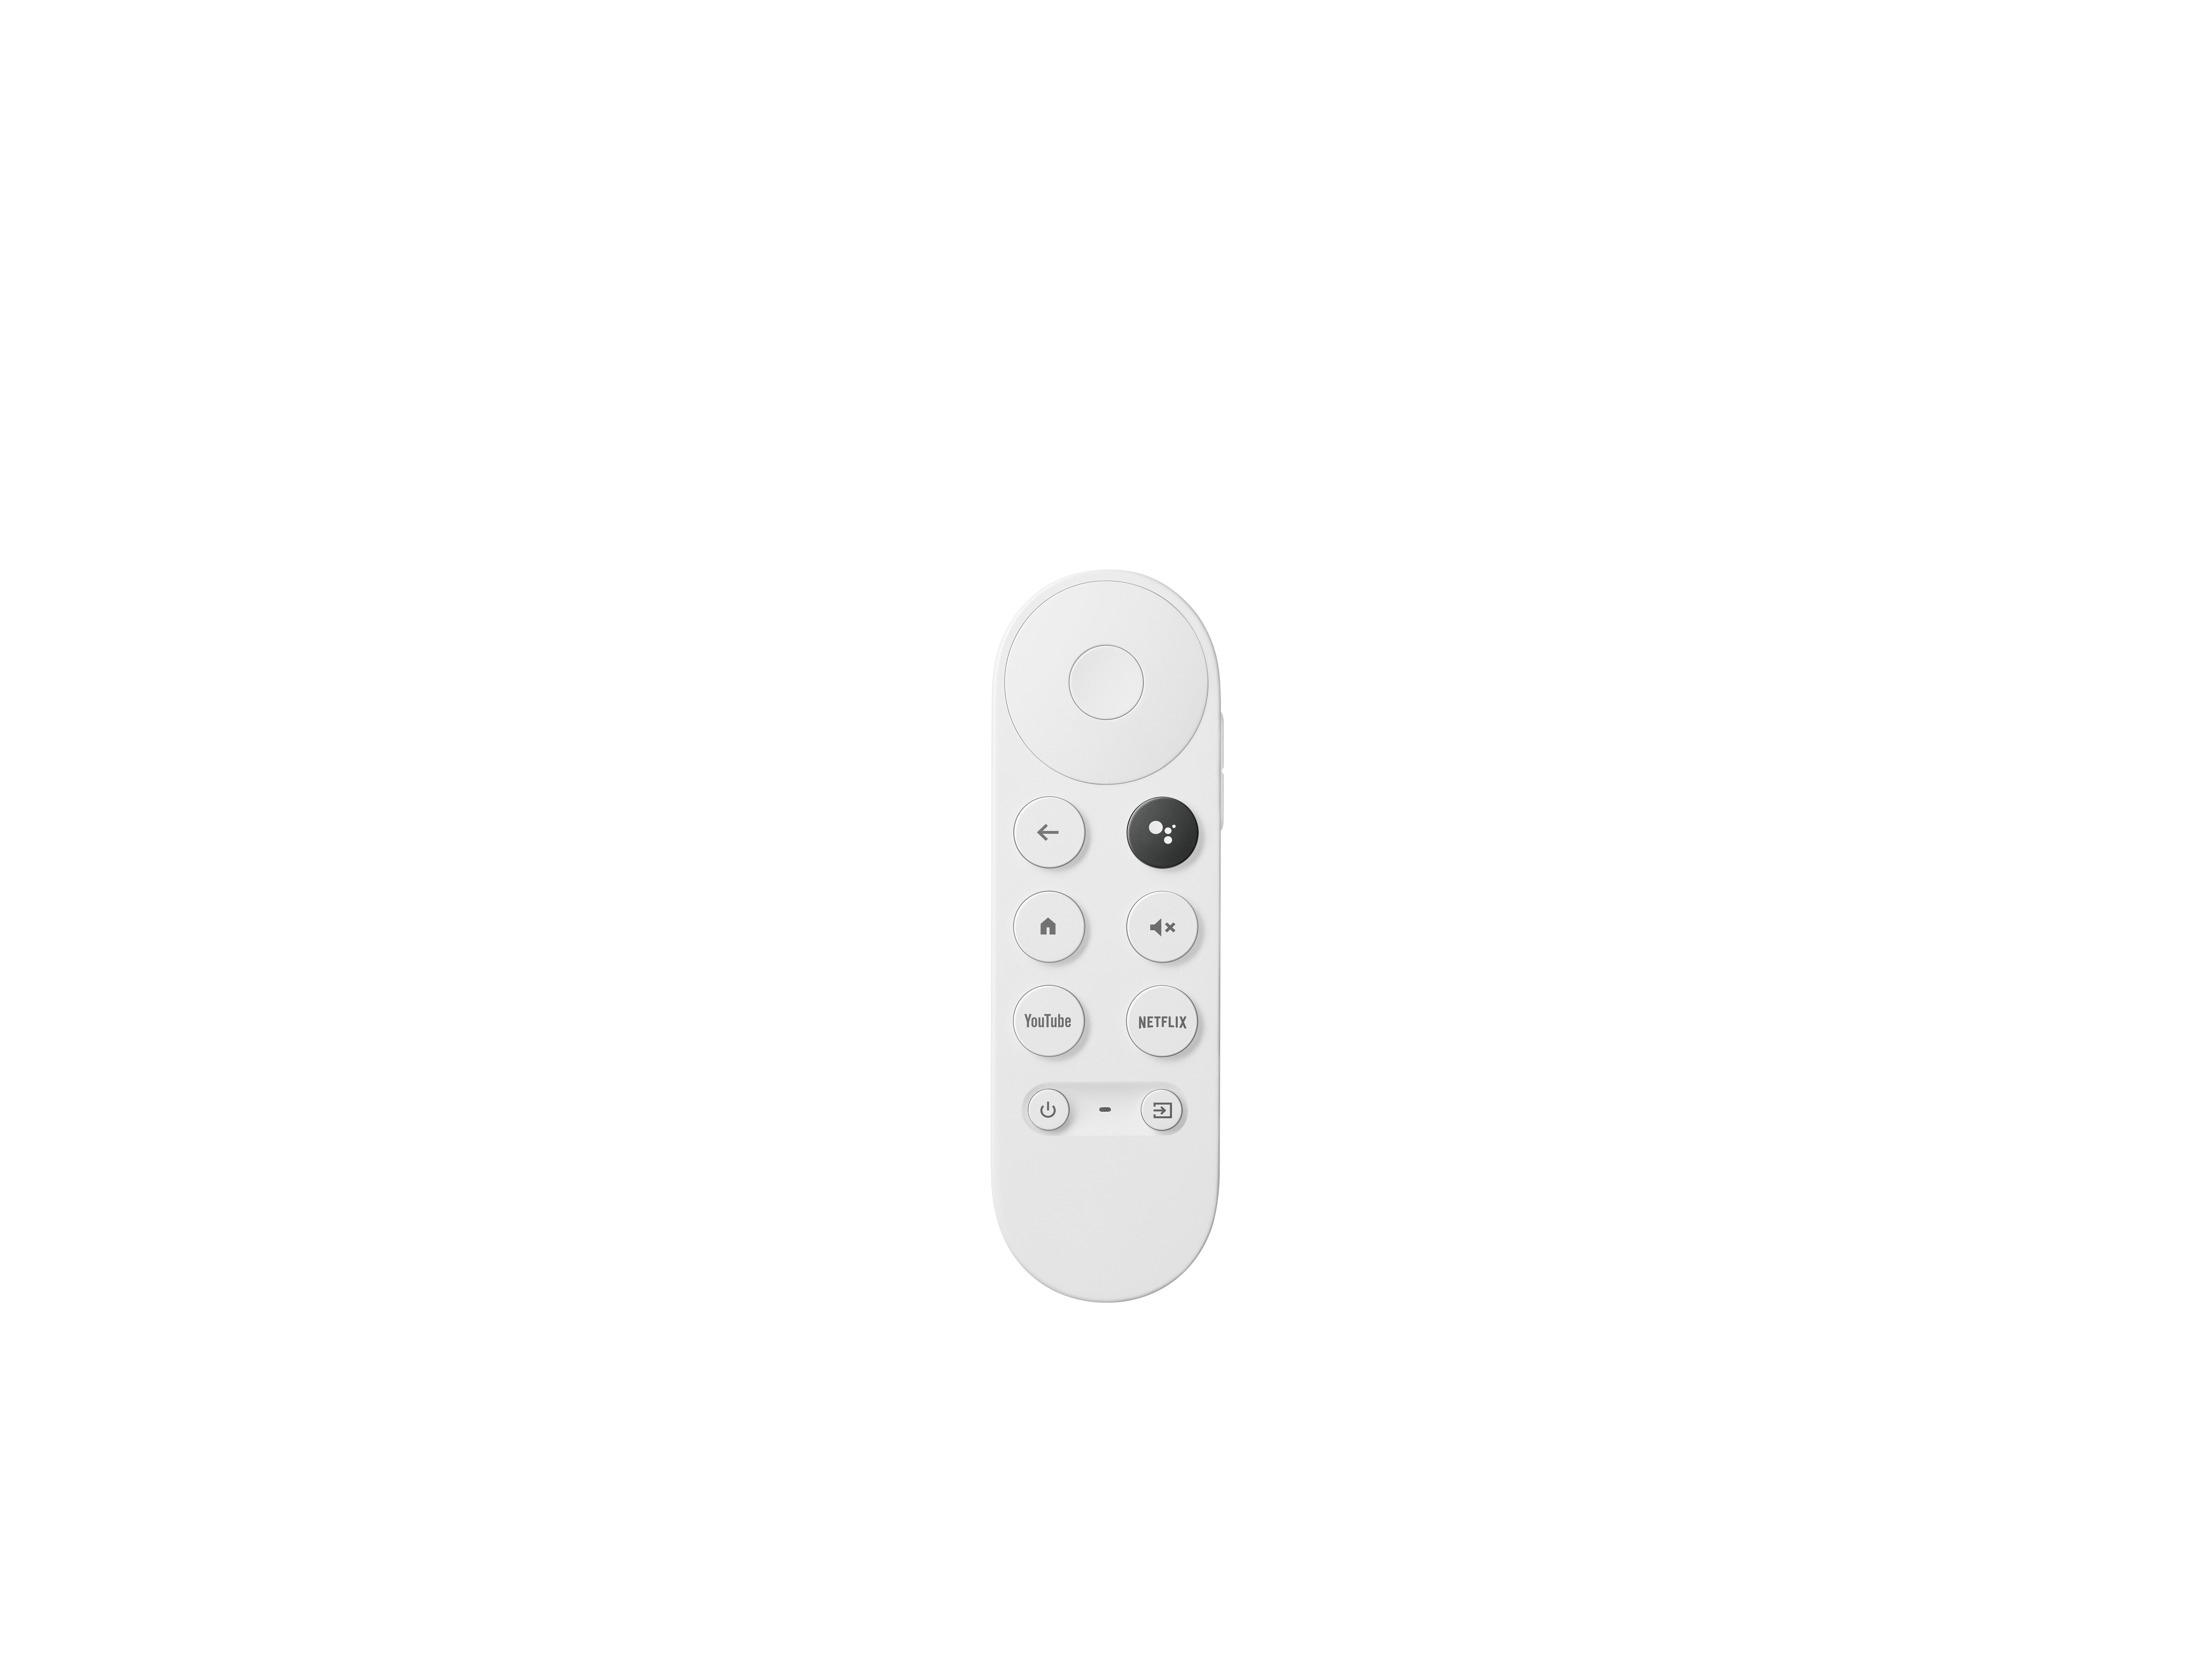 Chromecast Ultra умер, да здравствует Chromecast with Google TV (и адаптер Ethernet к нему за $20)